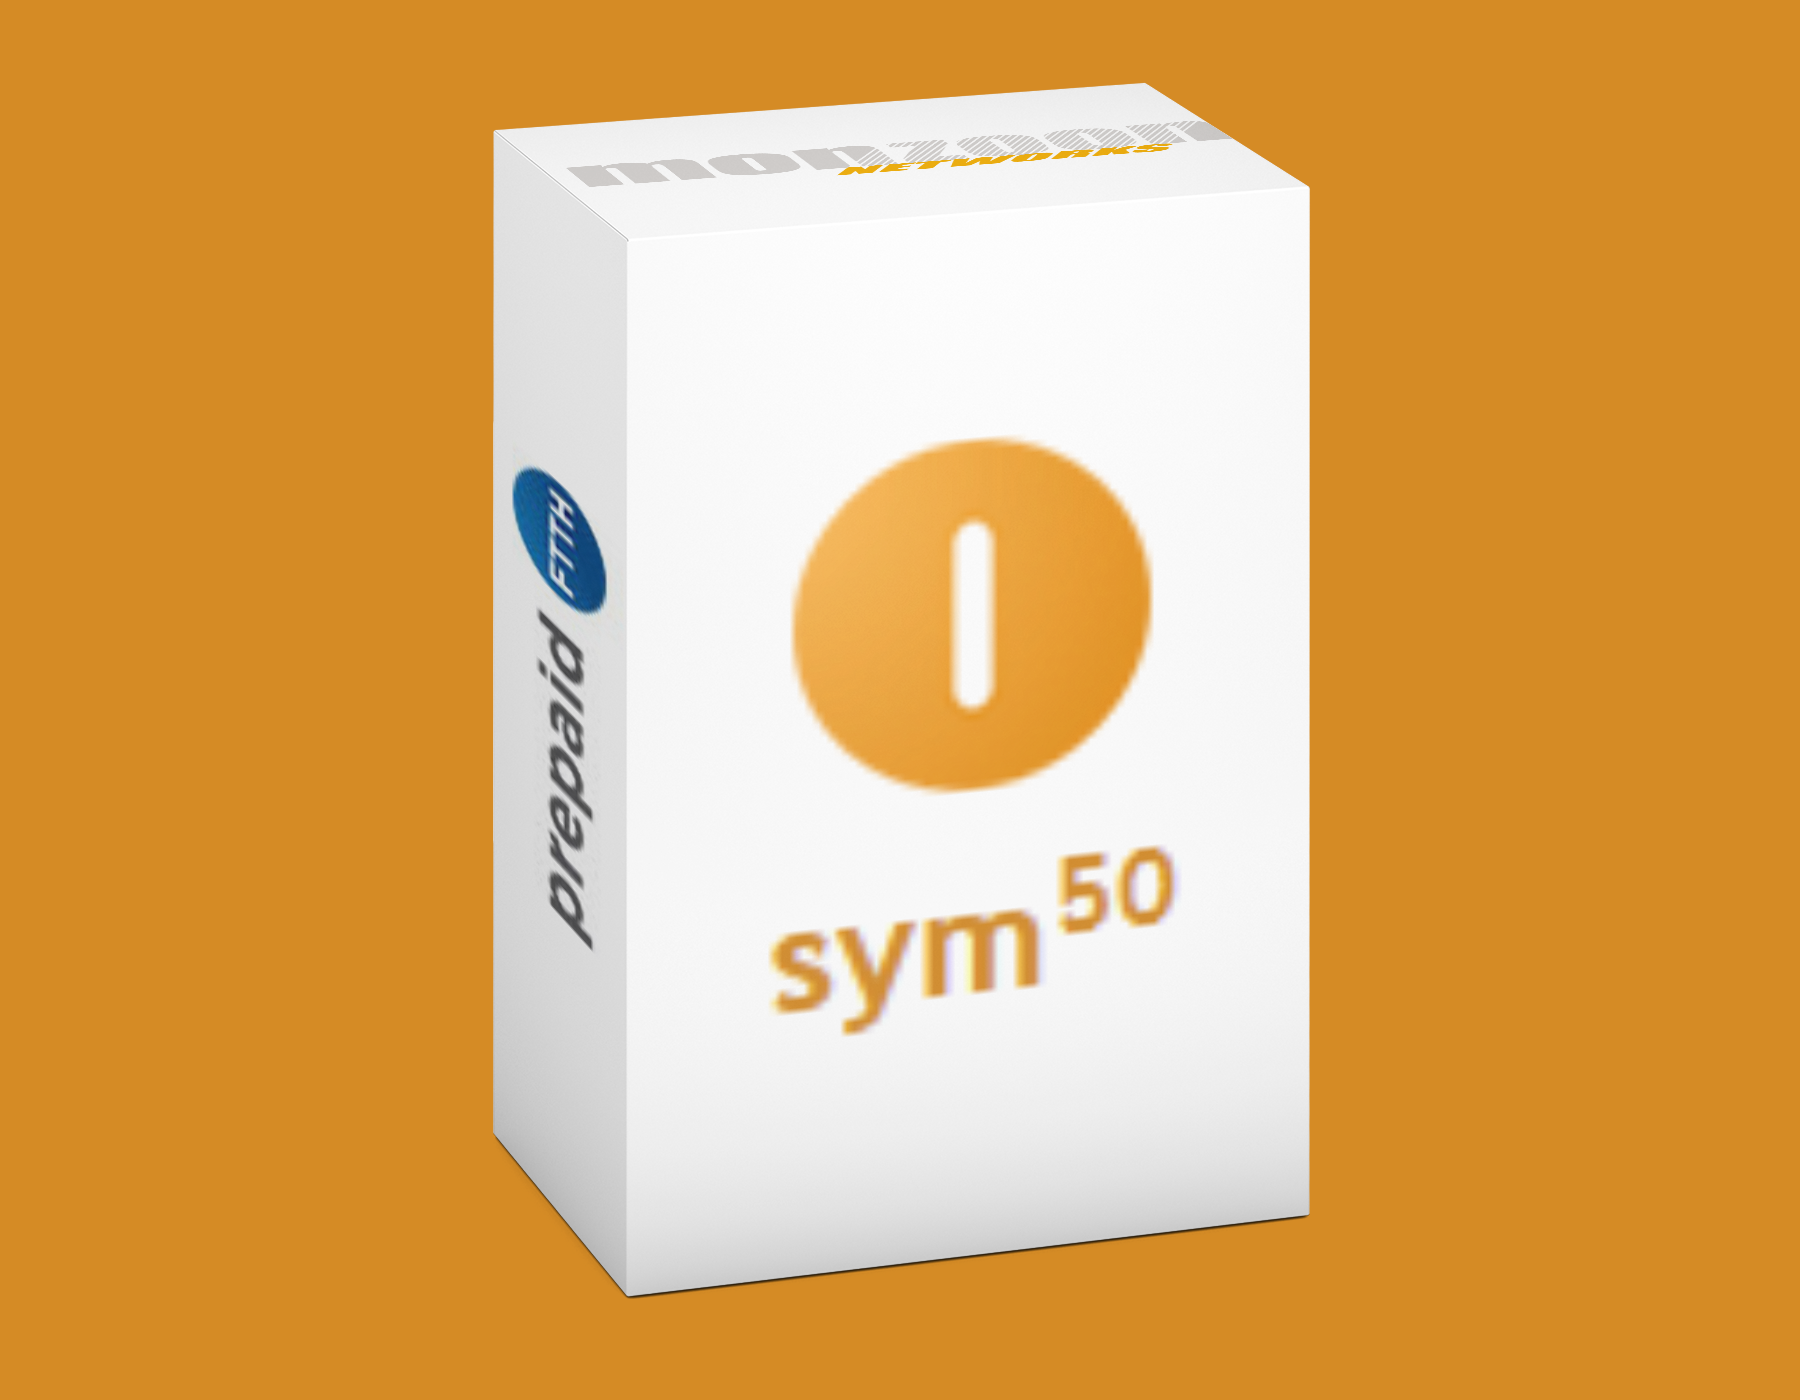 Monzoon prepaid FTTH «sym 50»